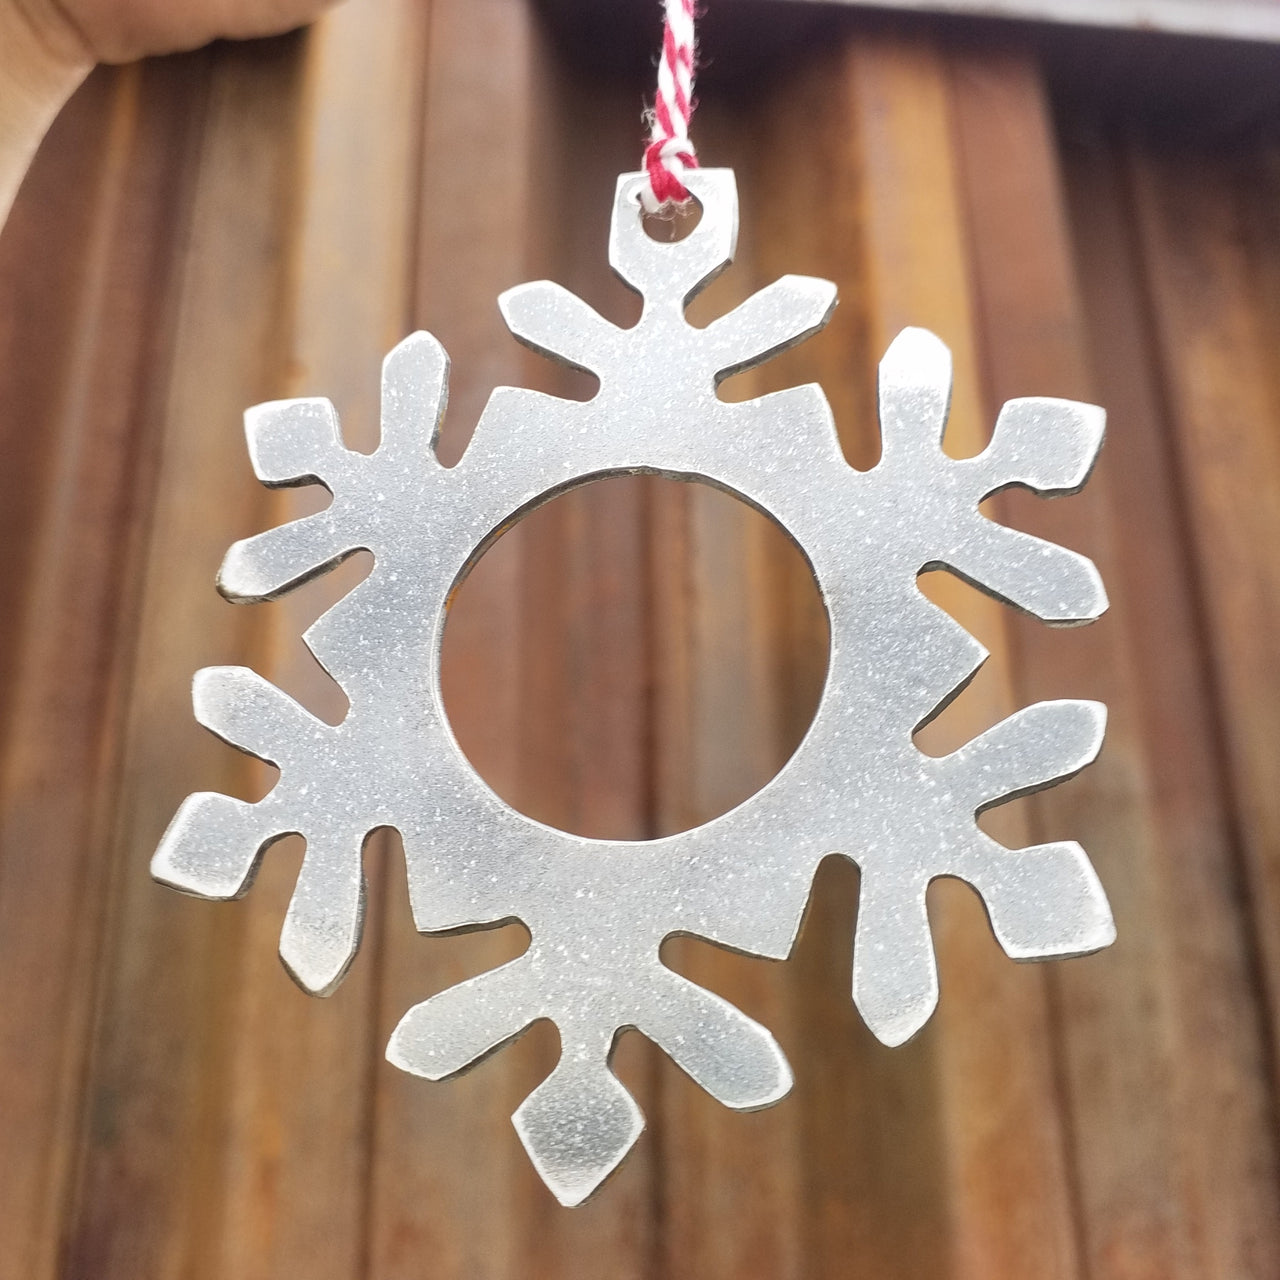 Winter Snowflake Christmas Ornament - FREE SHIPPING, Stocking Stuffer, Holiday Gift, Tree